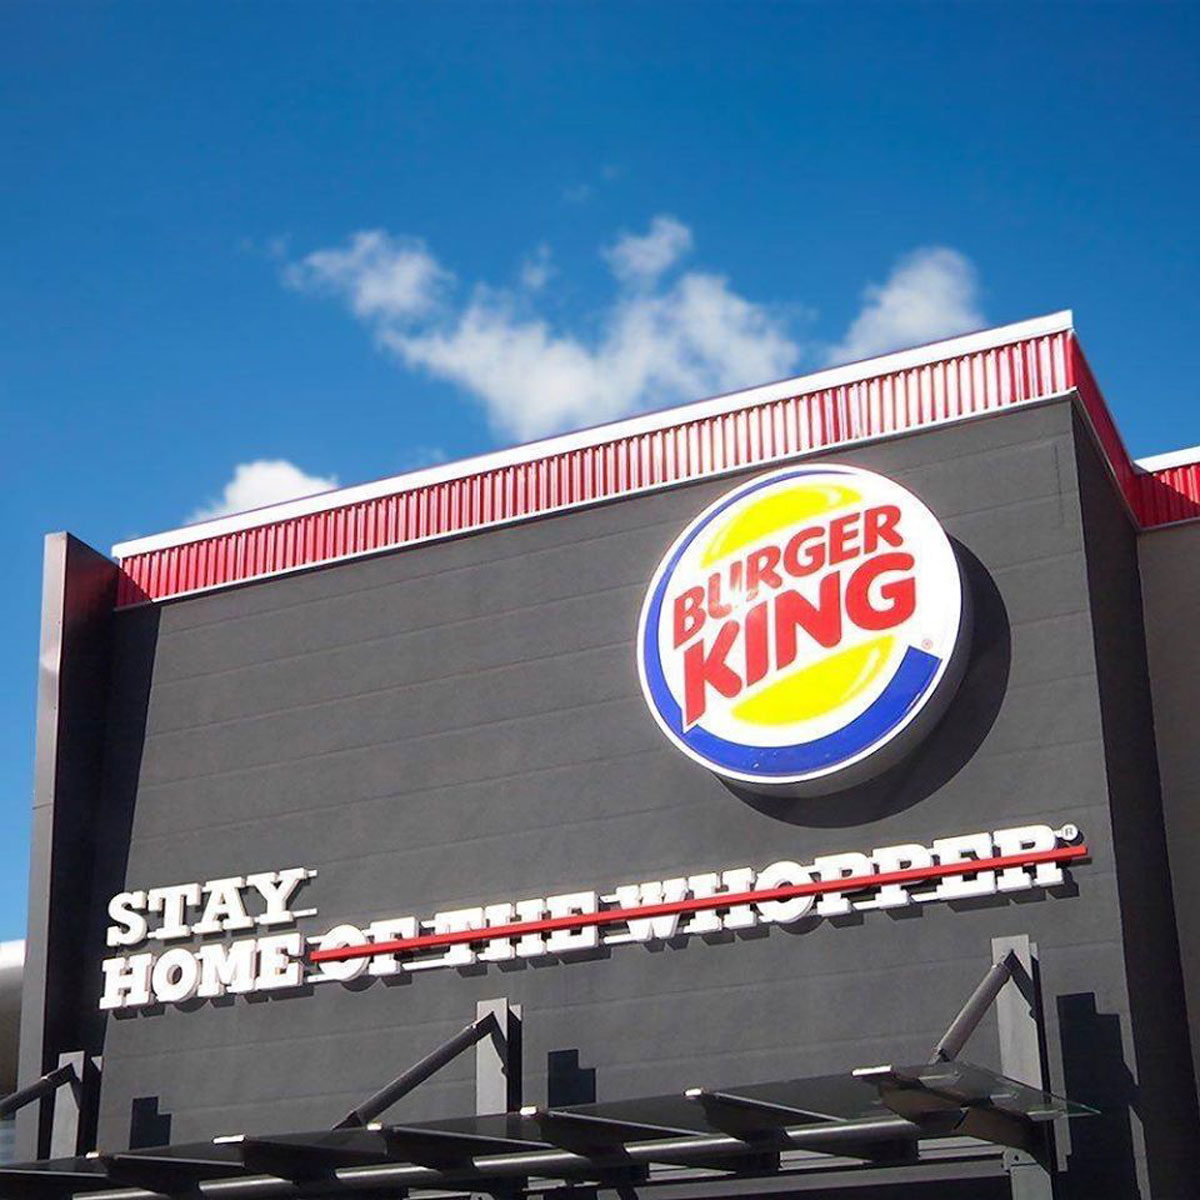 Burger King - Belgium - Stay home corona ad